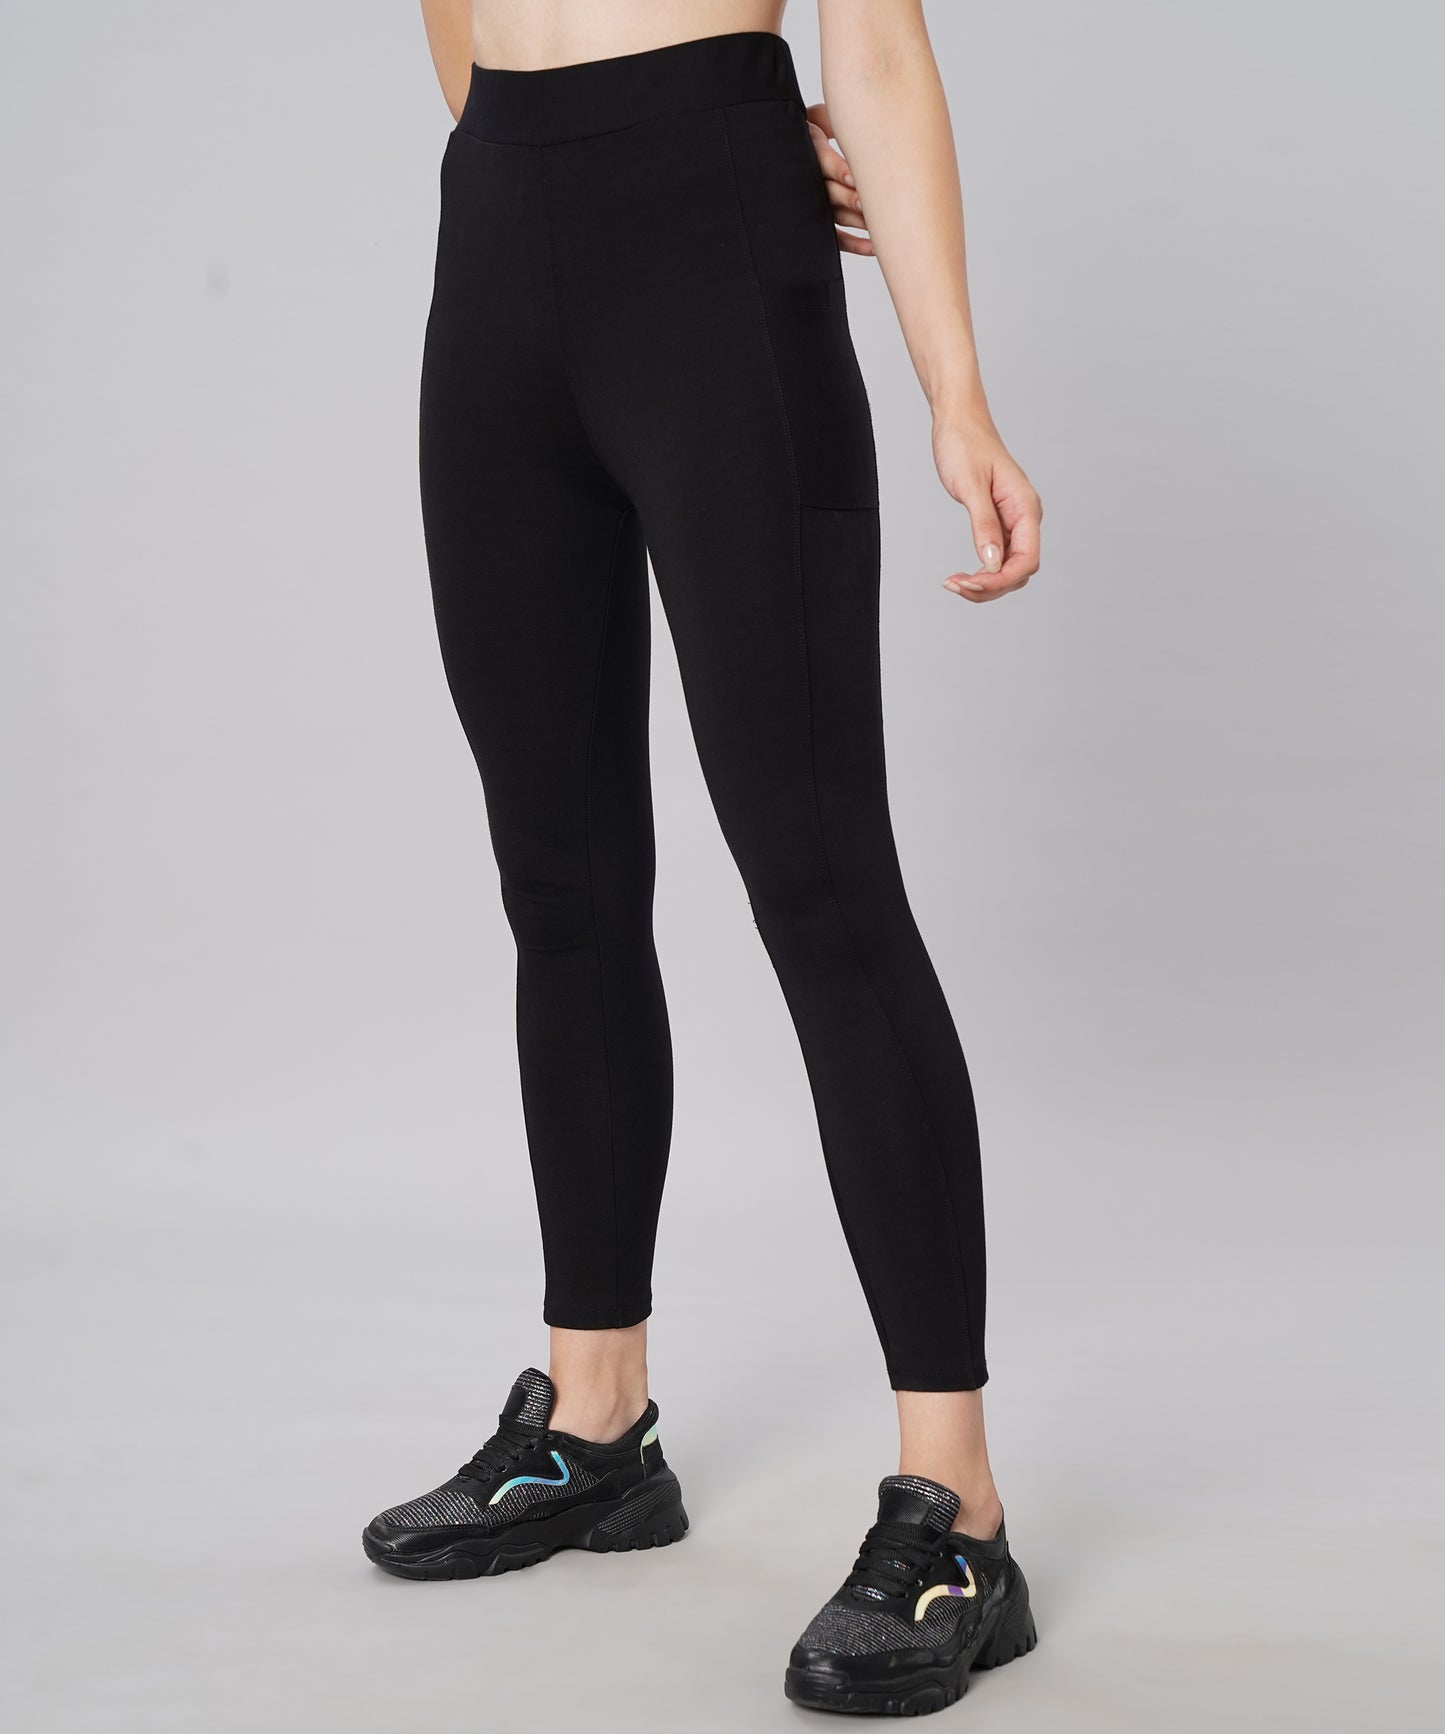 Ultimate Stretchable Jeggings with Pocket-Super-High Waisted Jeggings Yogapants Ankle Length(Black)